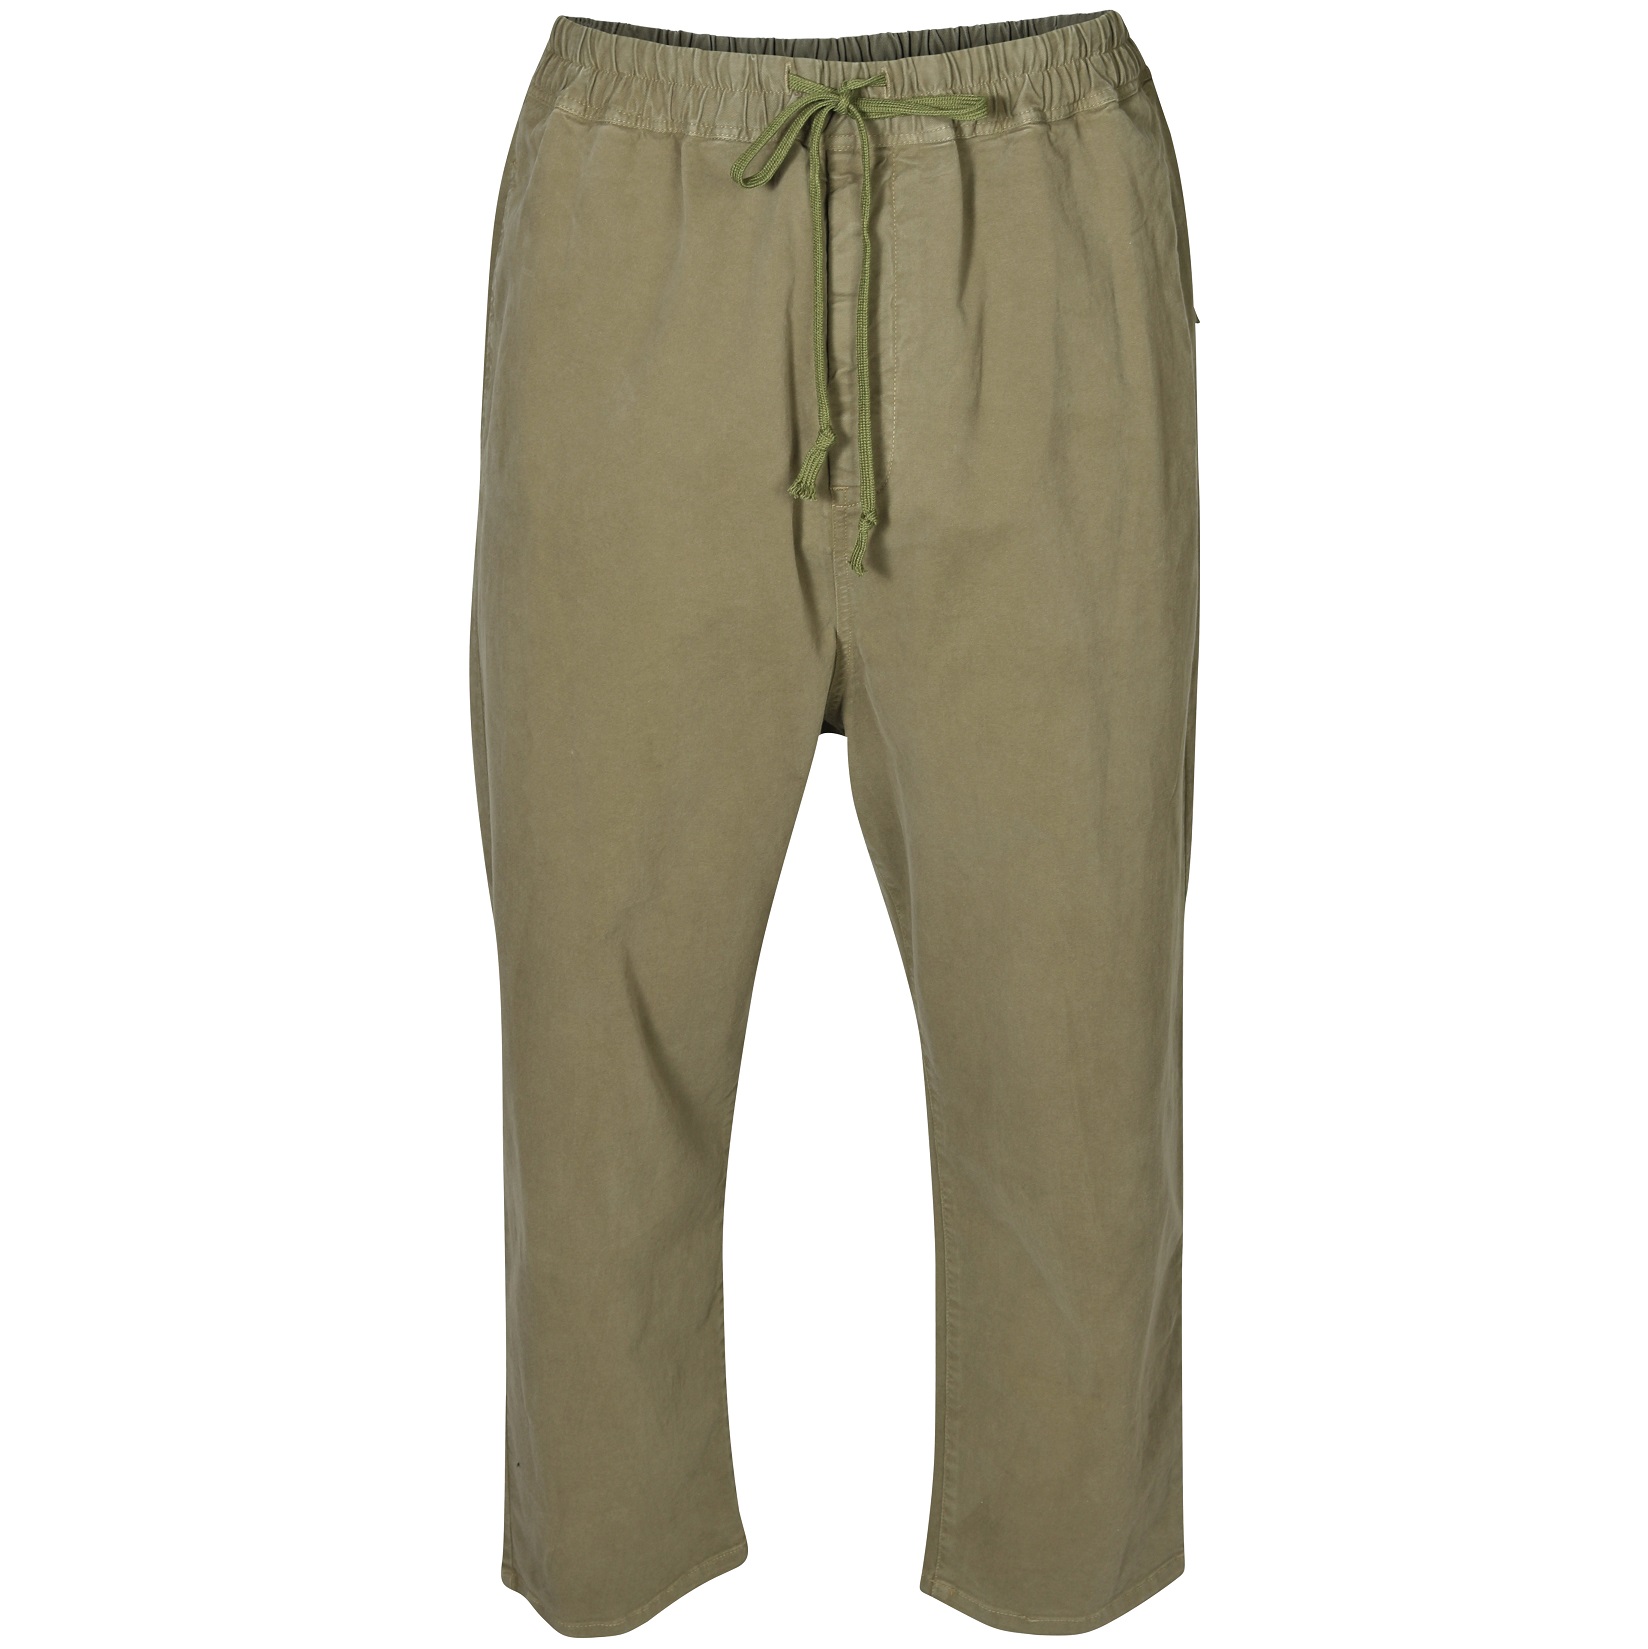 NILI LOTAN Walker Cotton Pant in Olive Green S